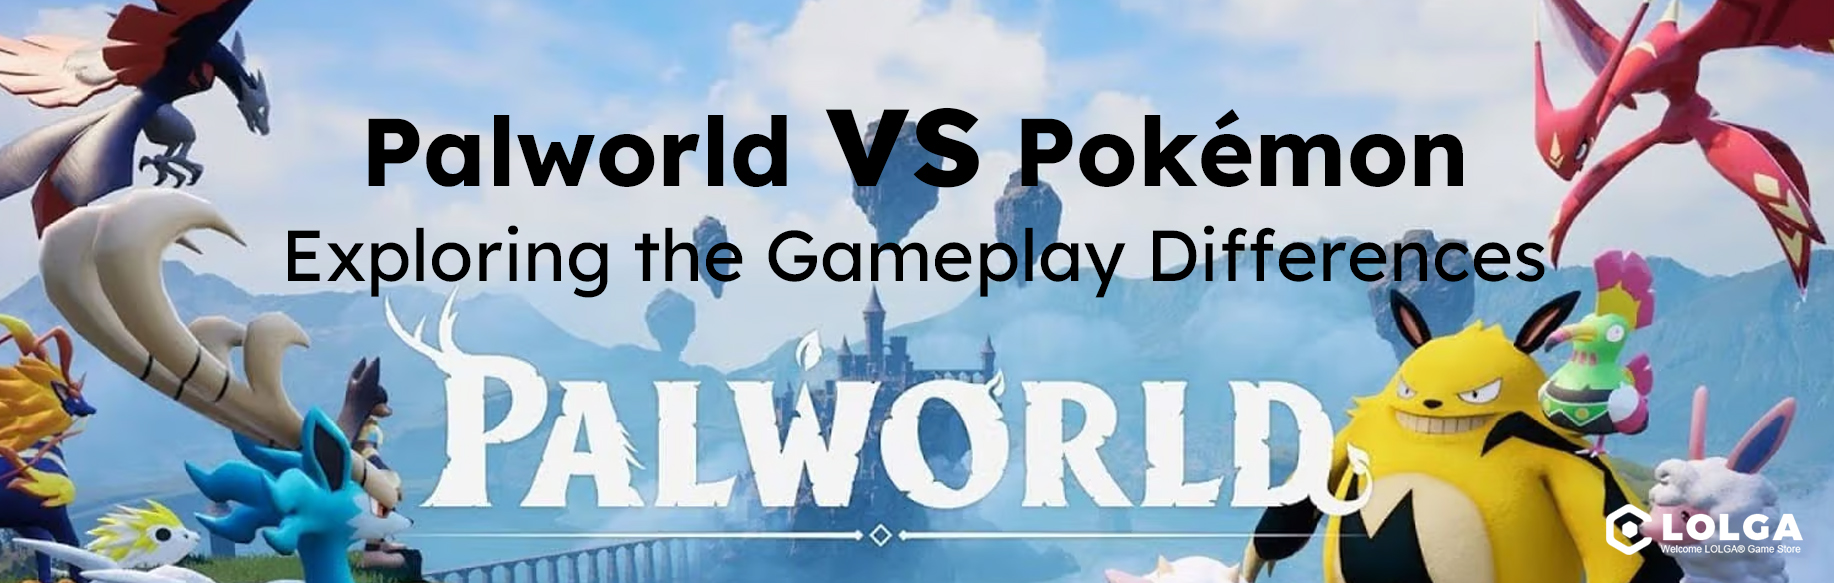 Palworld vs Pokémon: Exploring the Gameplay Differences